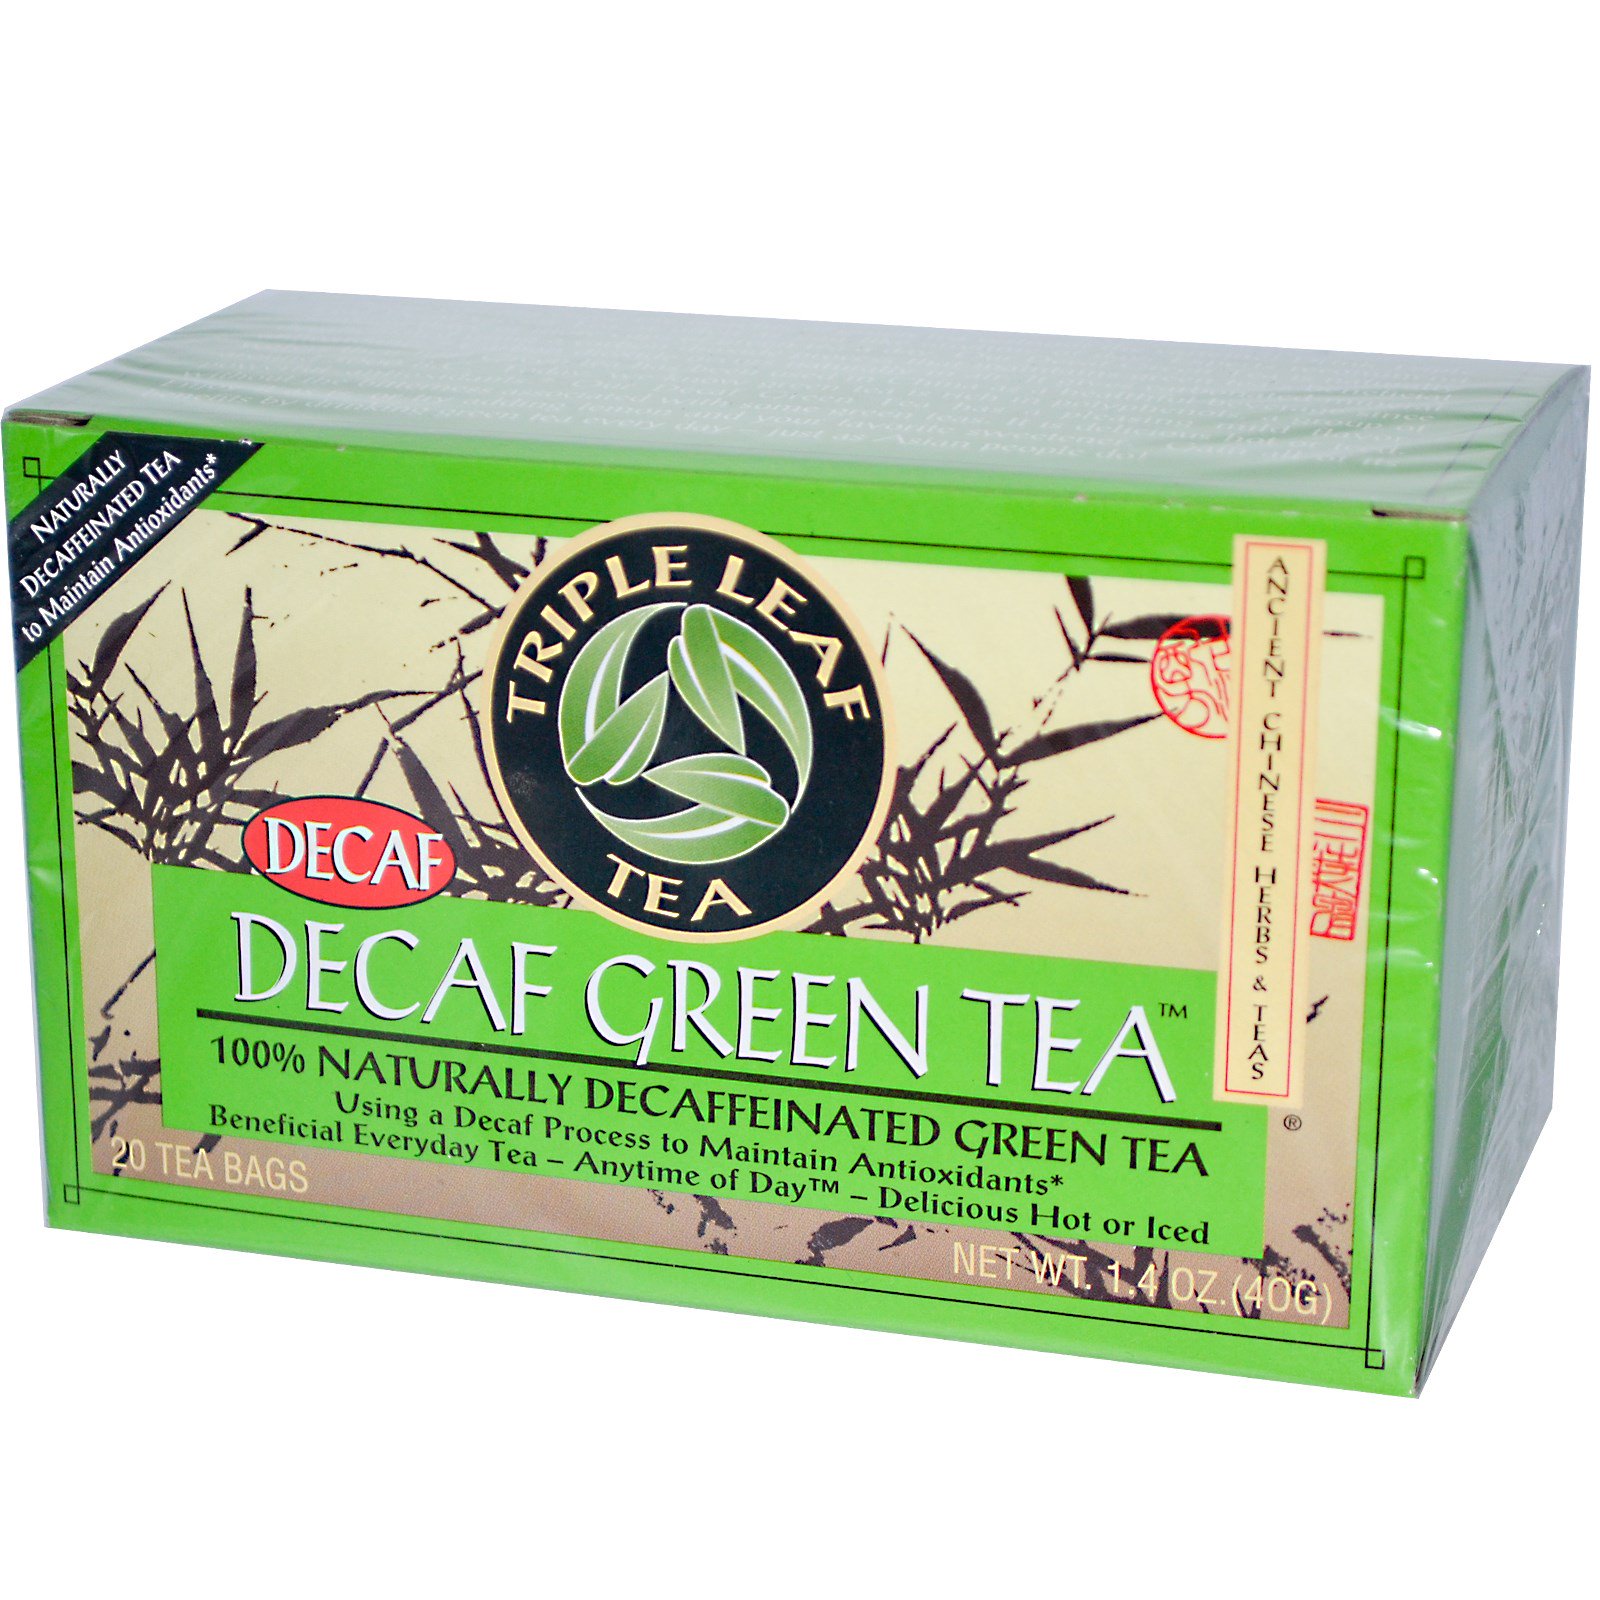 Triple Leaf Tea, Decaf Green Tea, 20 Tea Bags, 1.4 oz (40 g) - iHerb